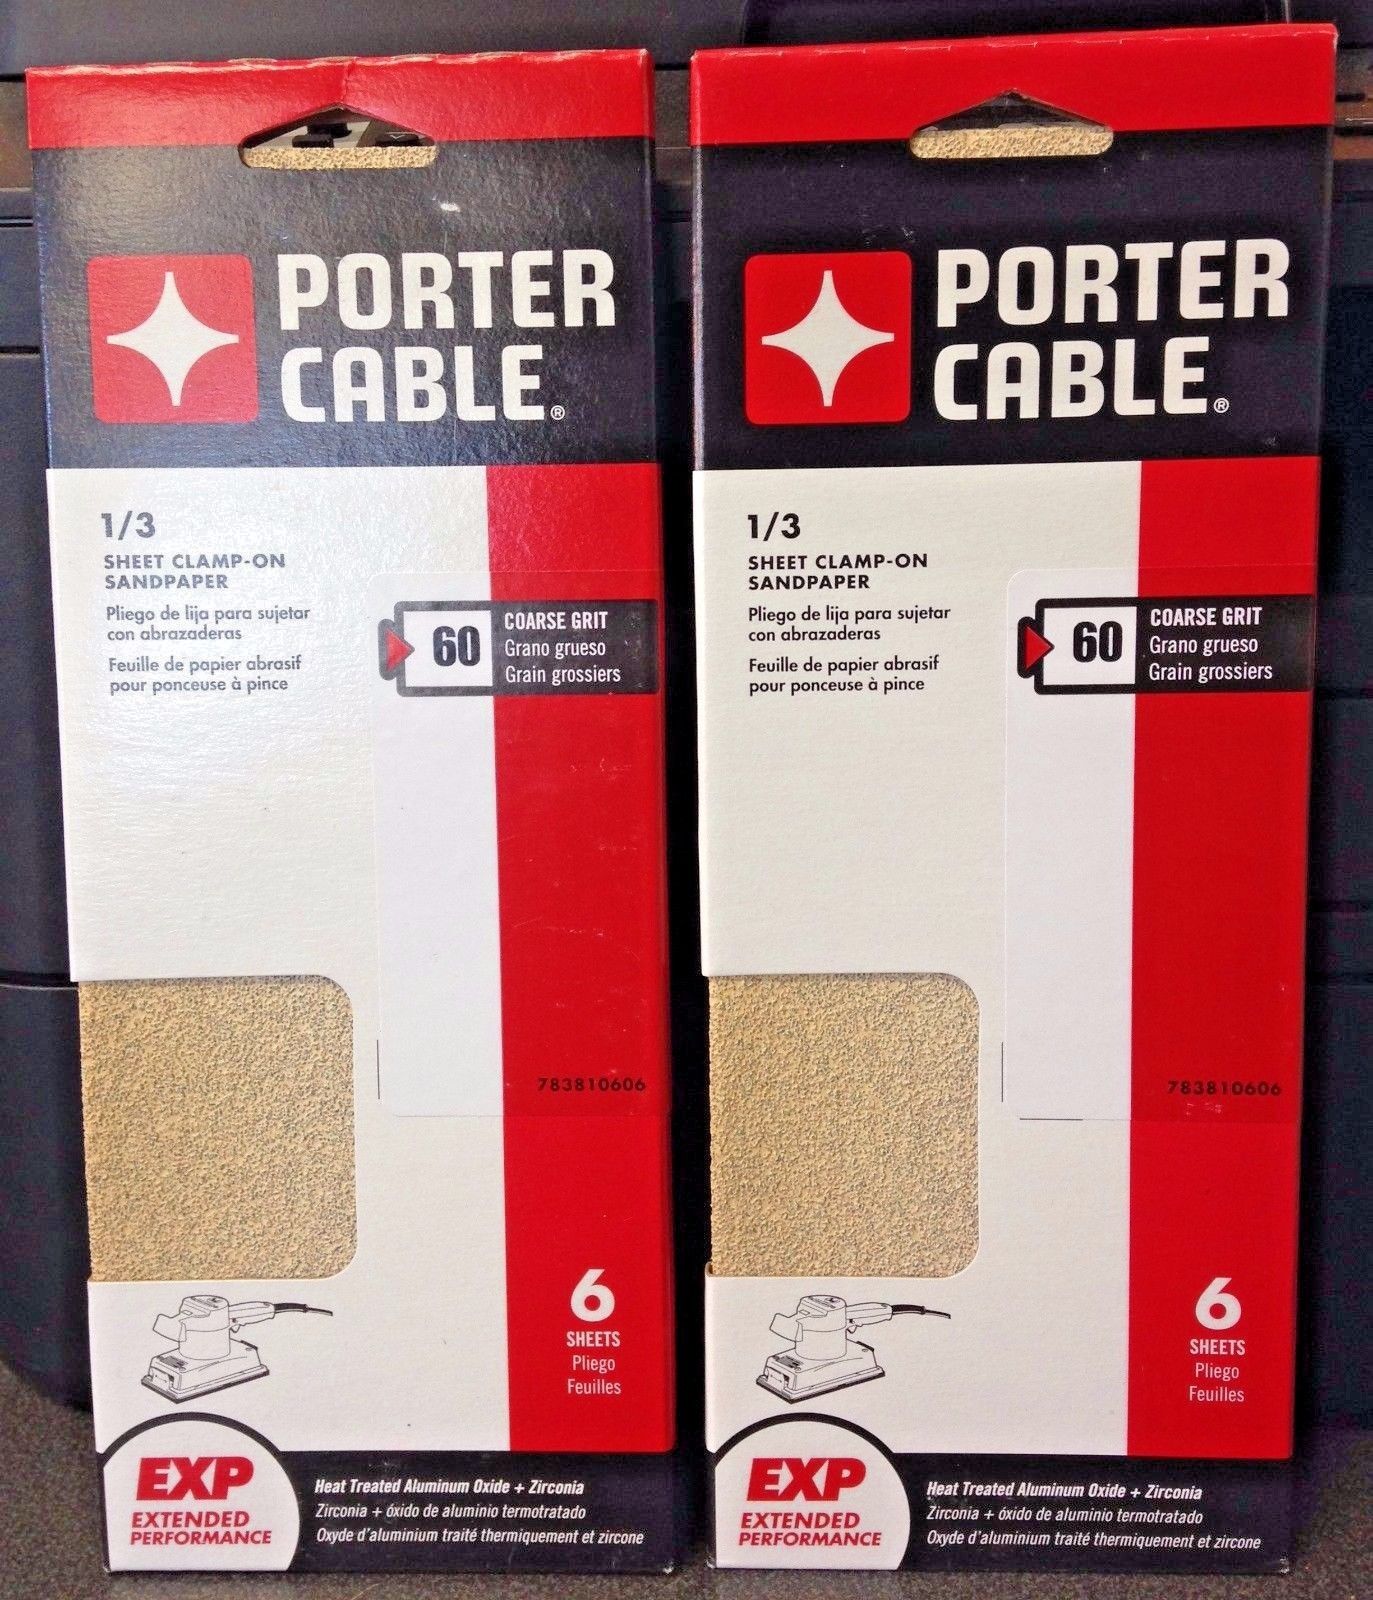 Porter Cable 783810606 6 Sheets 1/3 Sheet Clamp On Sandpaper 60 Coarse Grit 2PKS